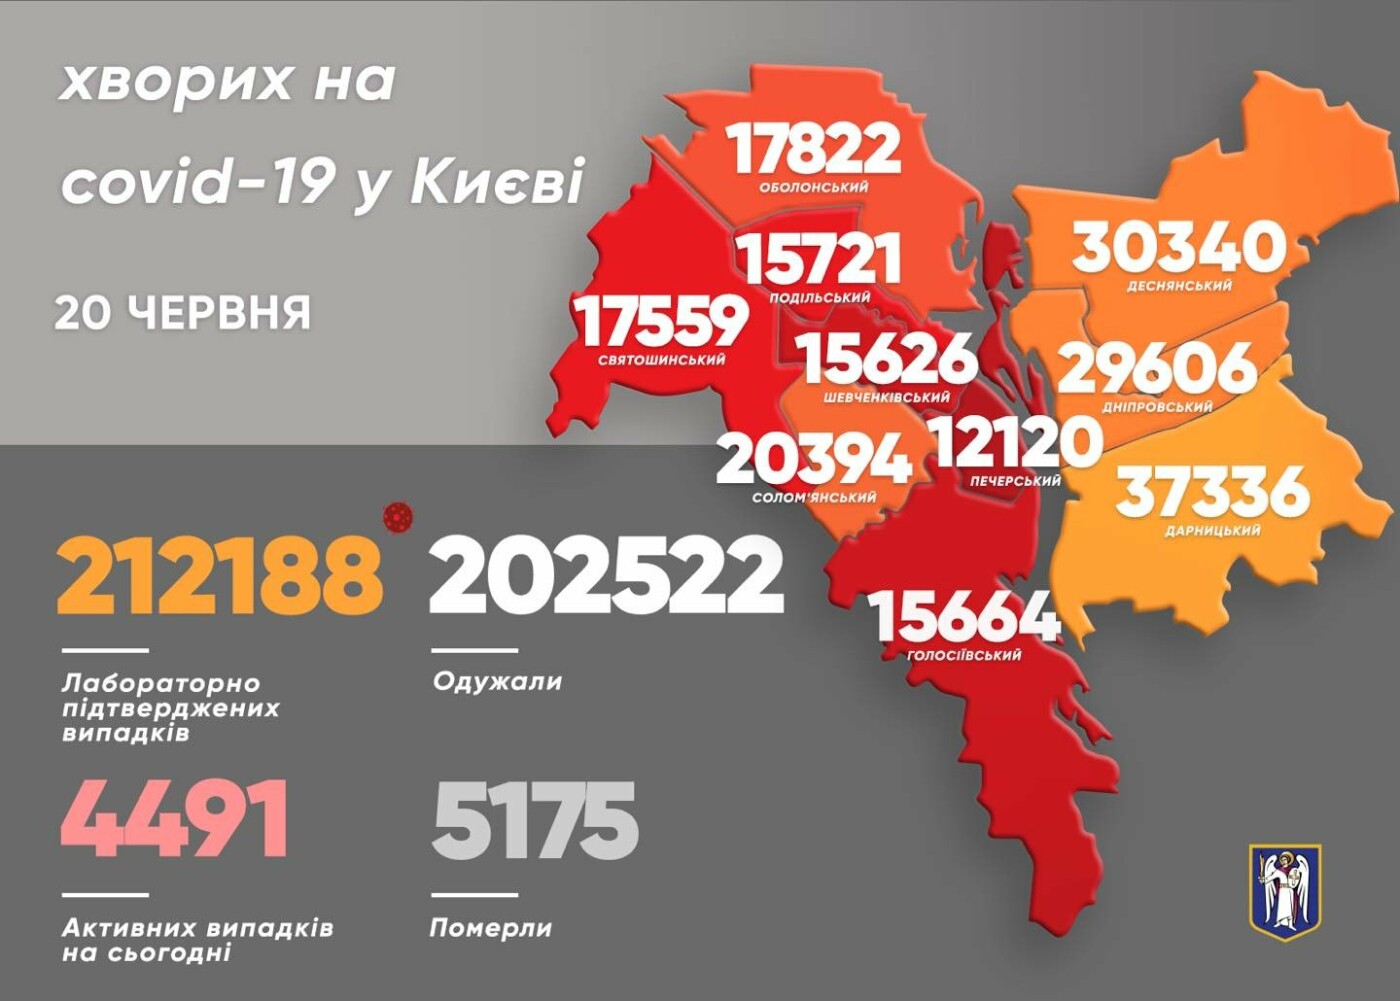 Коронавирус в Киеве: появилась статистика COVID-19 по районам на 20 июня